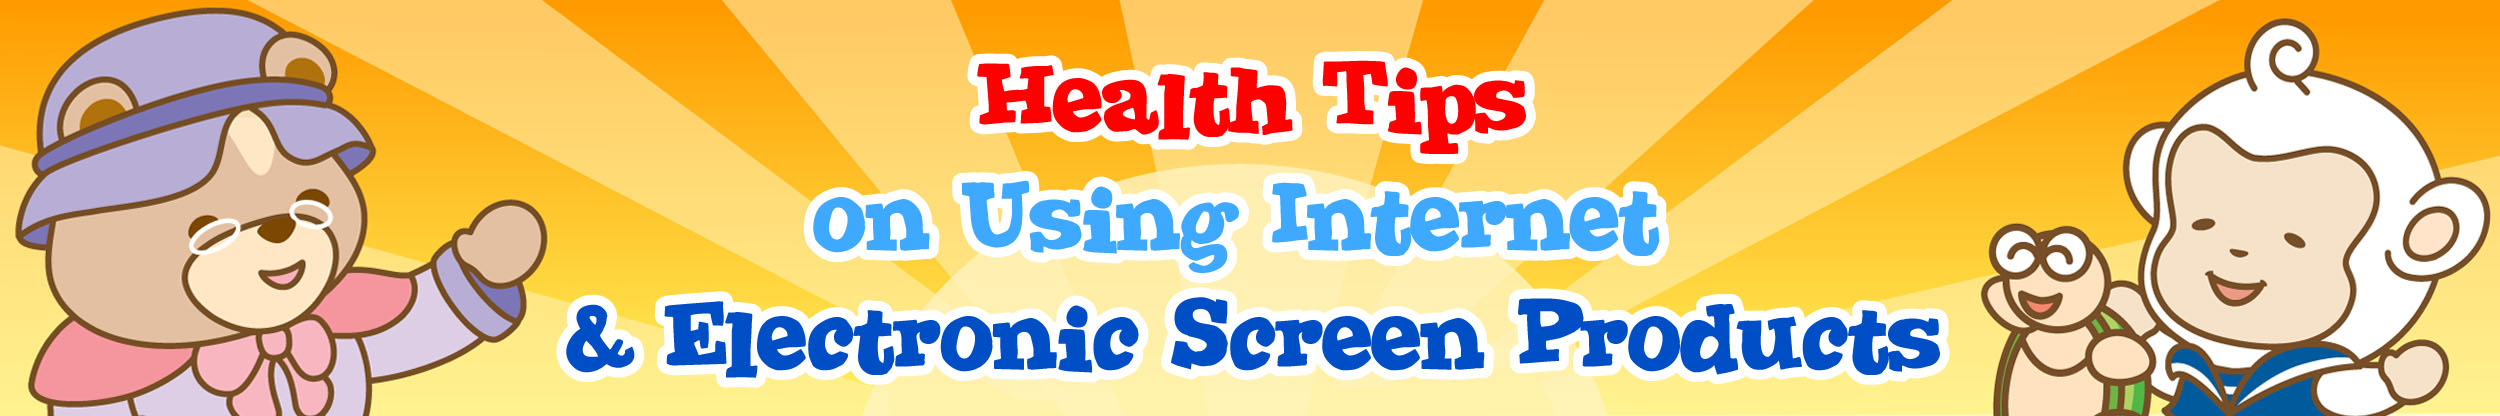 Watch health tips videos